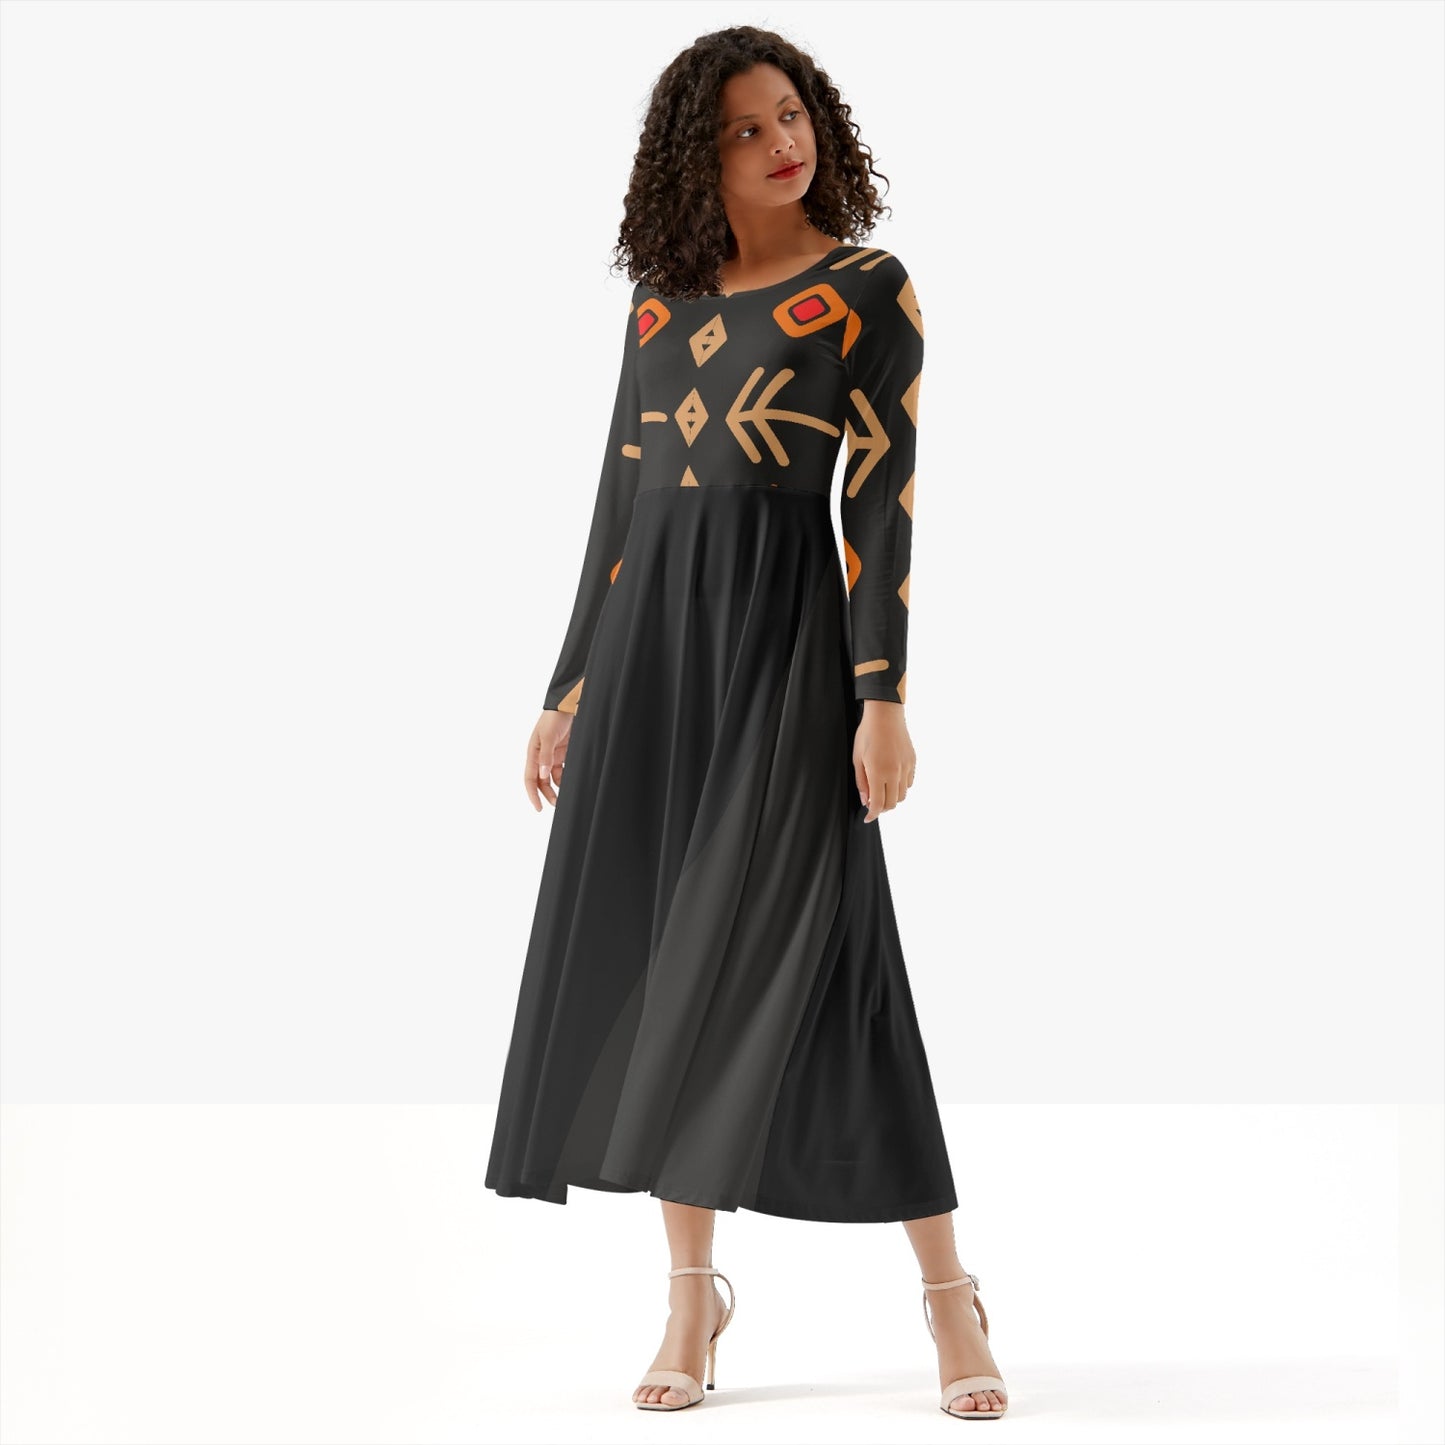 289. Women's Long-Sleeve One-piece Dress